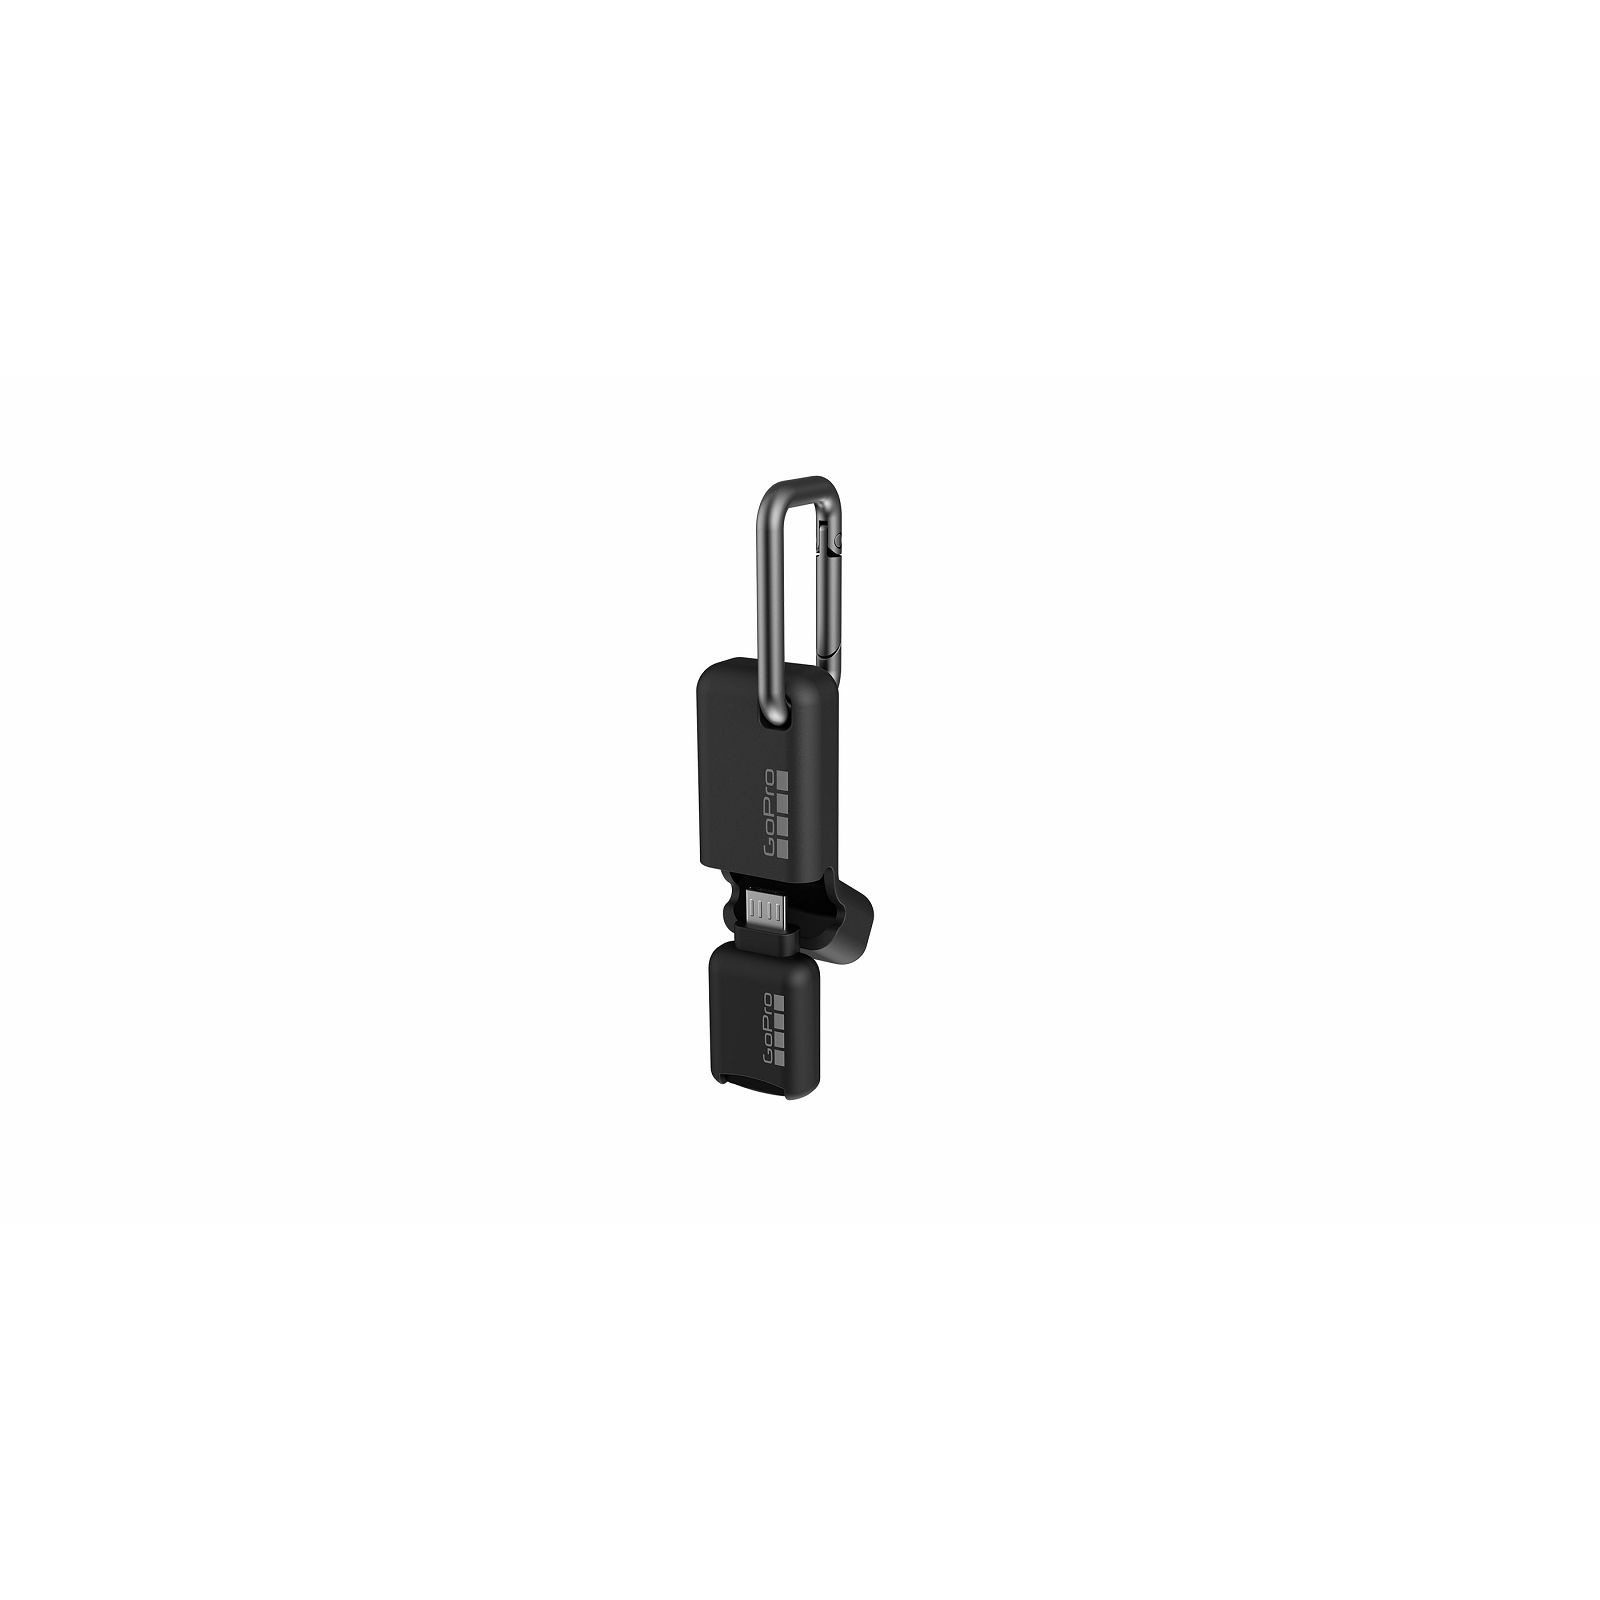 GoPro Quik Key Micro SD Card Reader Micro USB Connector (AMCRU-001)